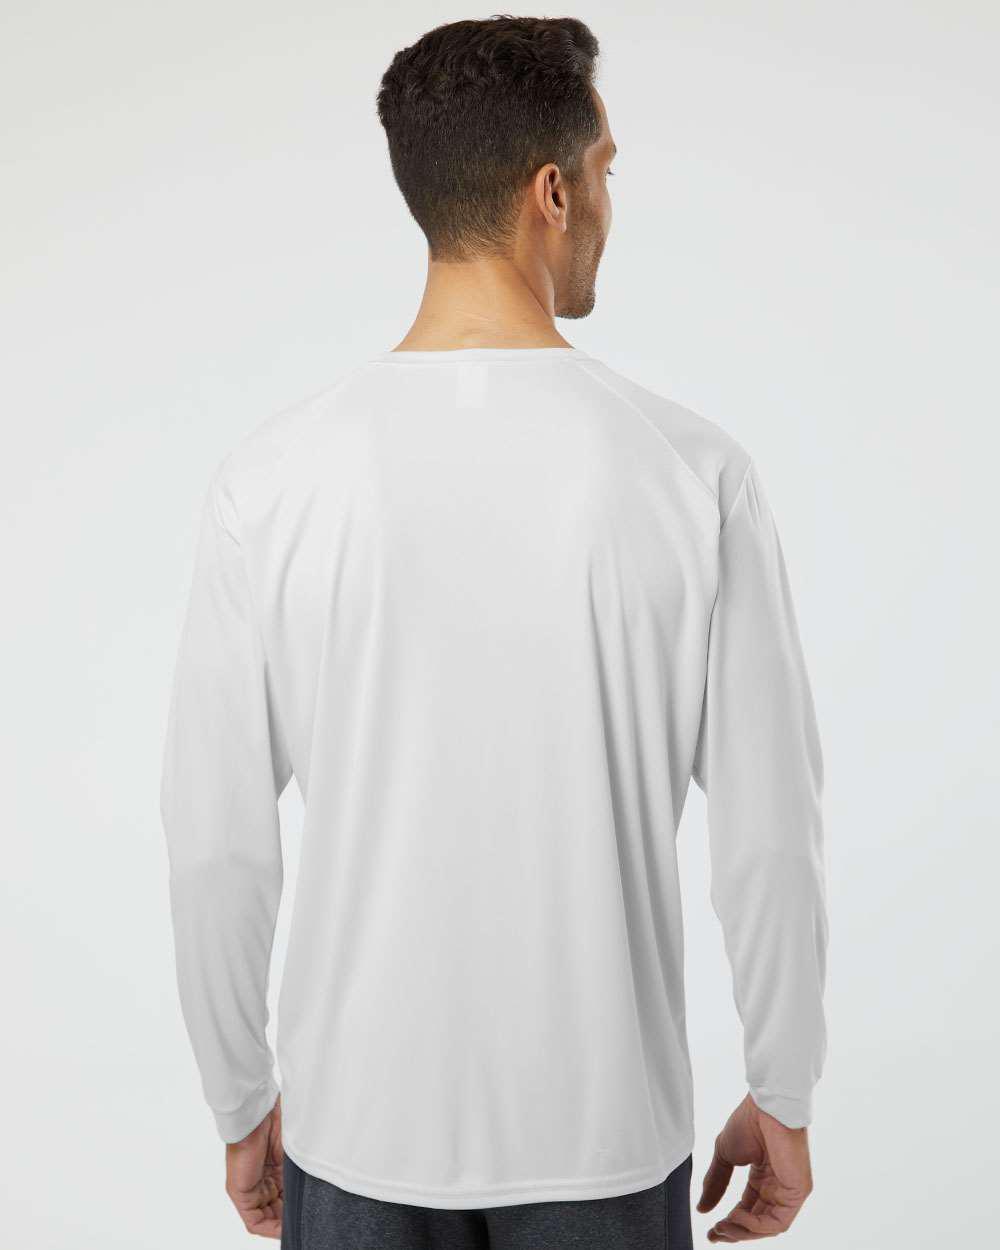 Embroidered 210 Paragon Long Islander Performance Long Sleeve T-Shirt